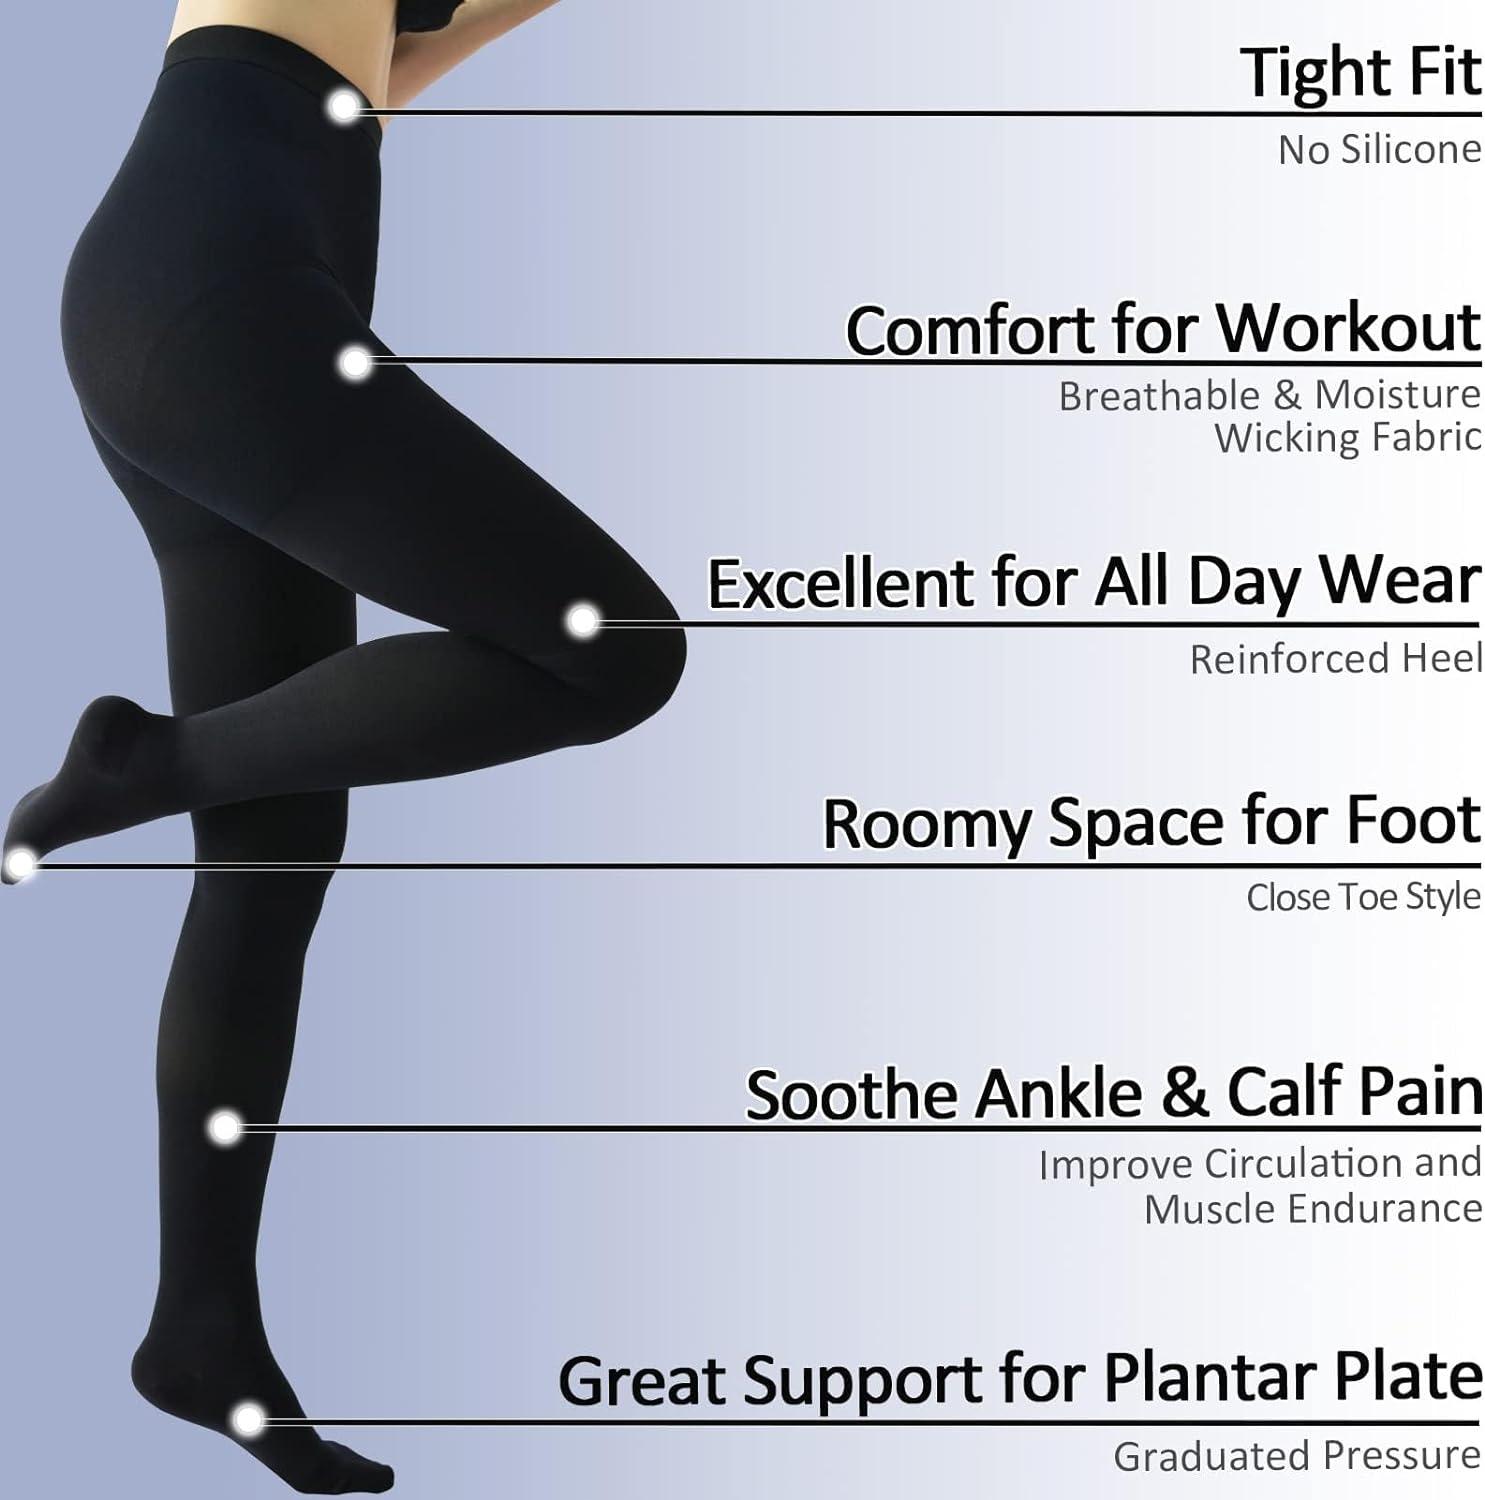 Beister 20-30 mmHg Knee High Compression Socks for Women Men Calf Varicose  Veins